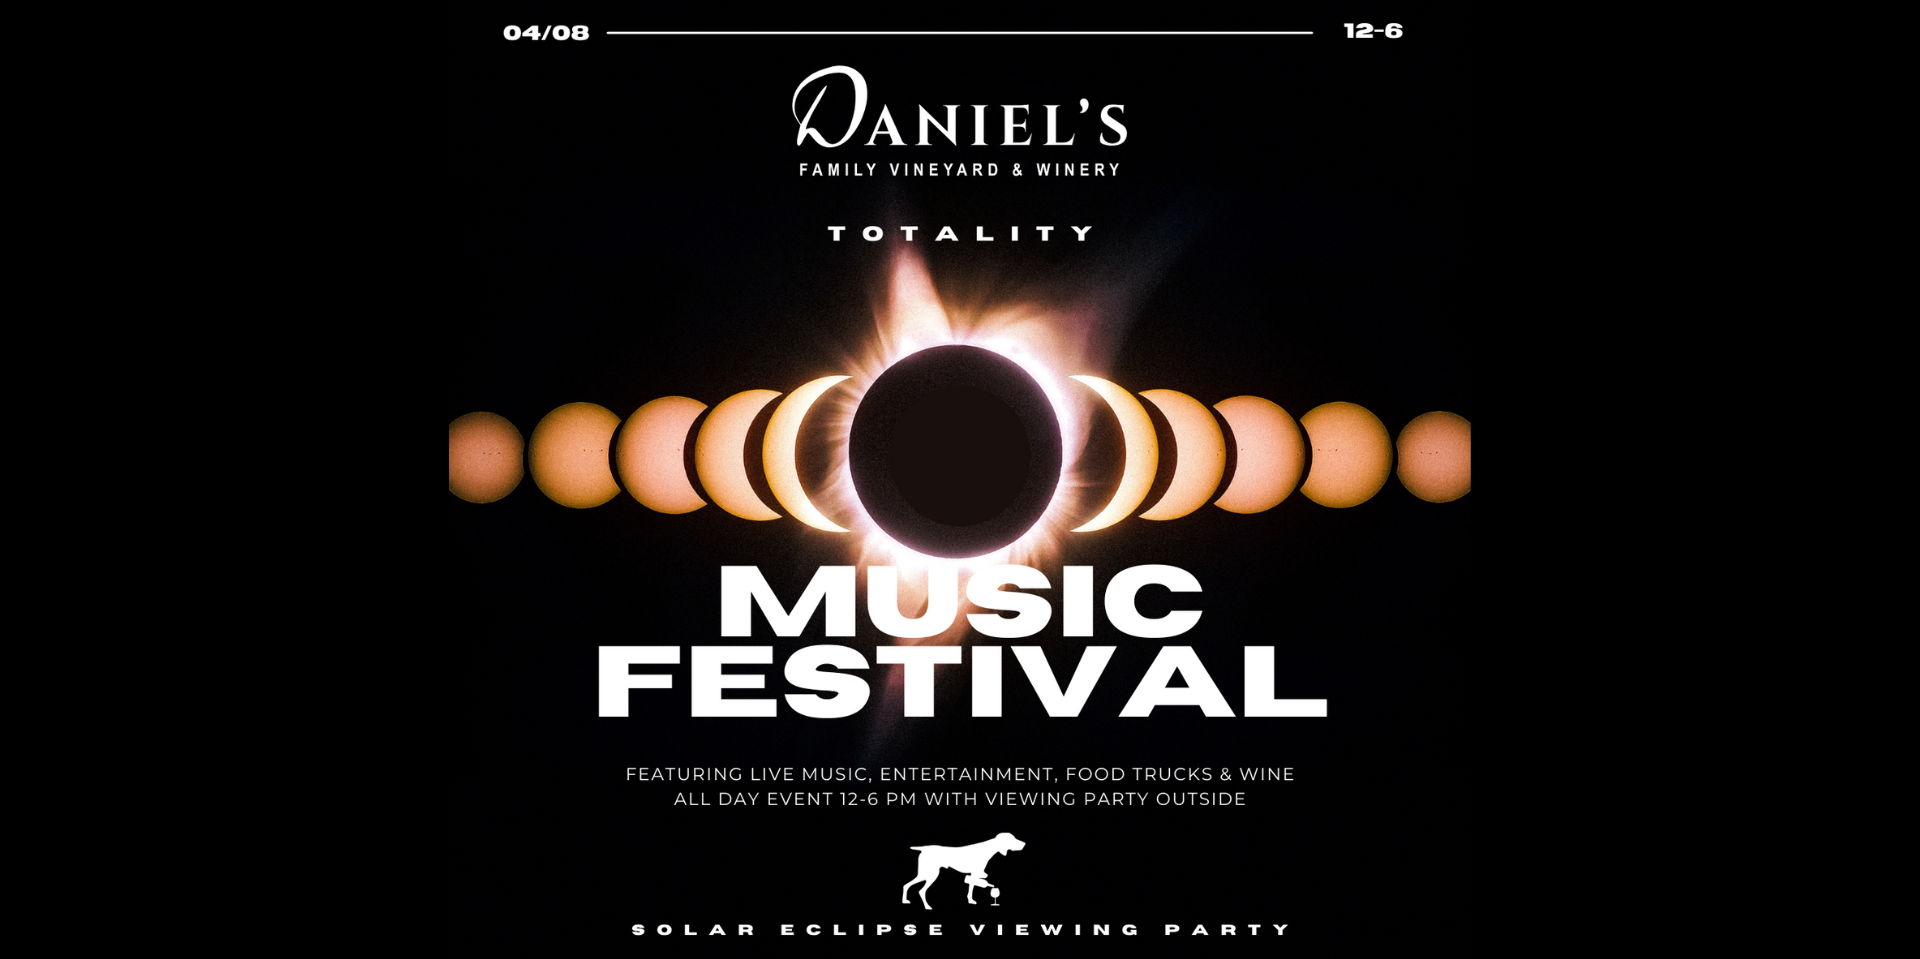 Total Eclipse Music Festival at Daniel's Vineyard promotional image